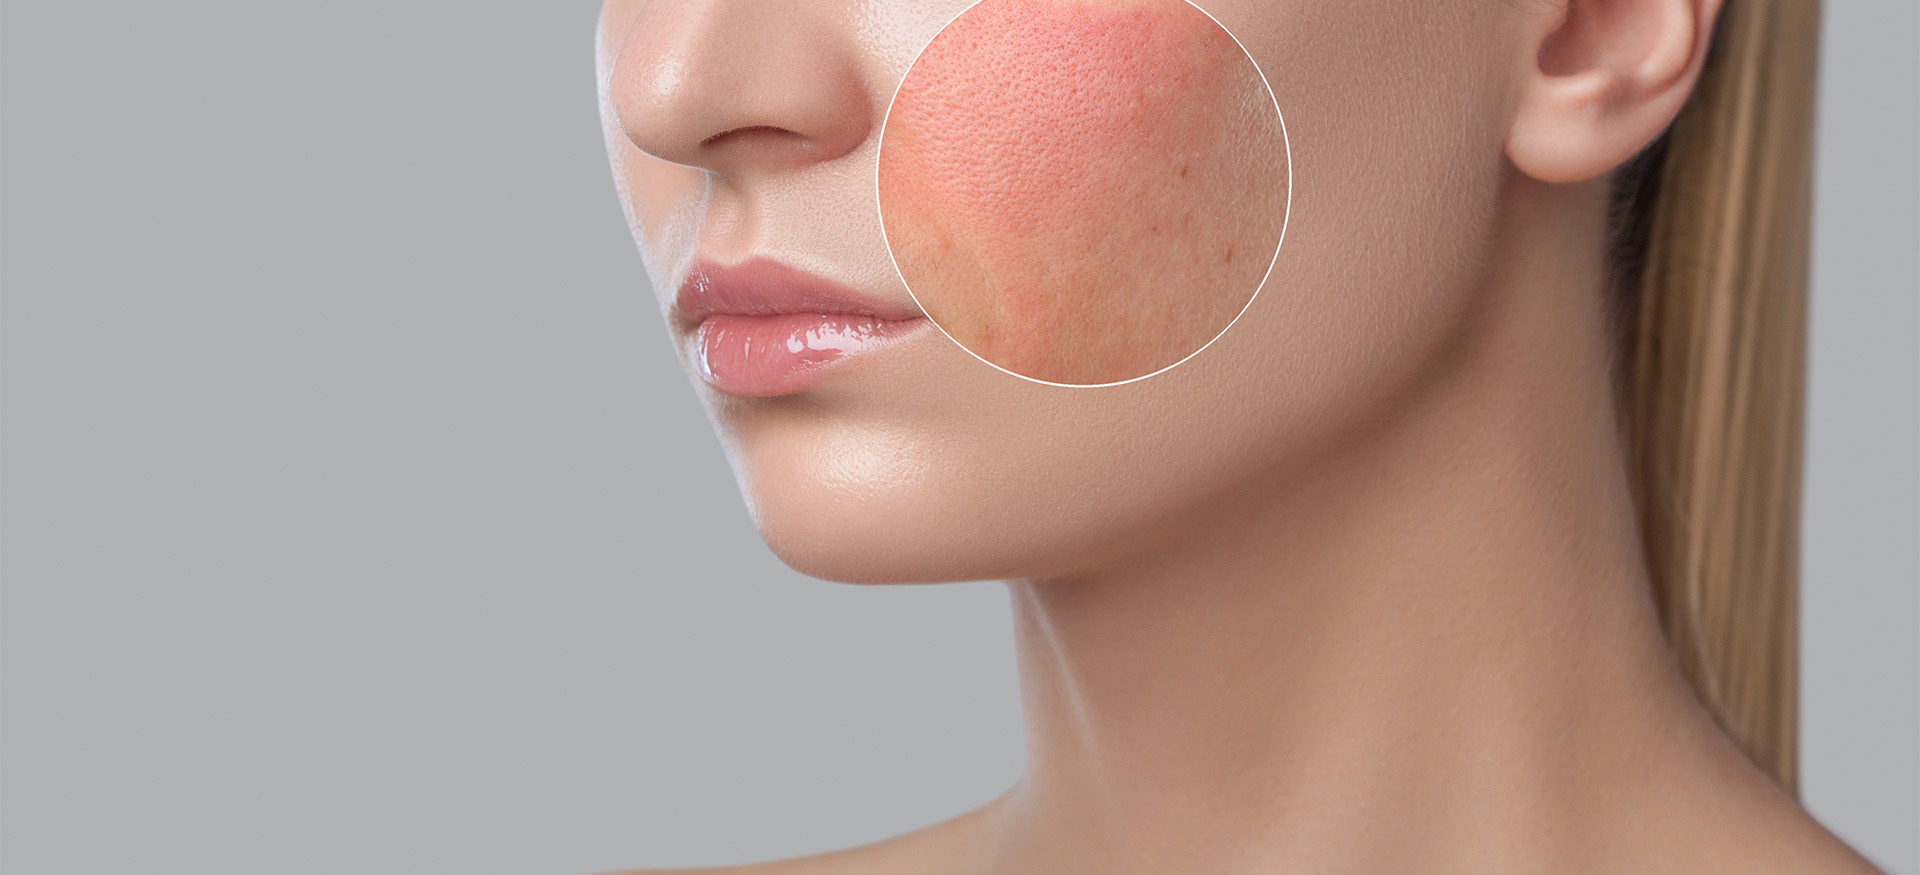 Blotchy facial rash